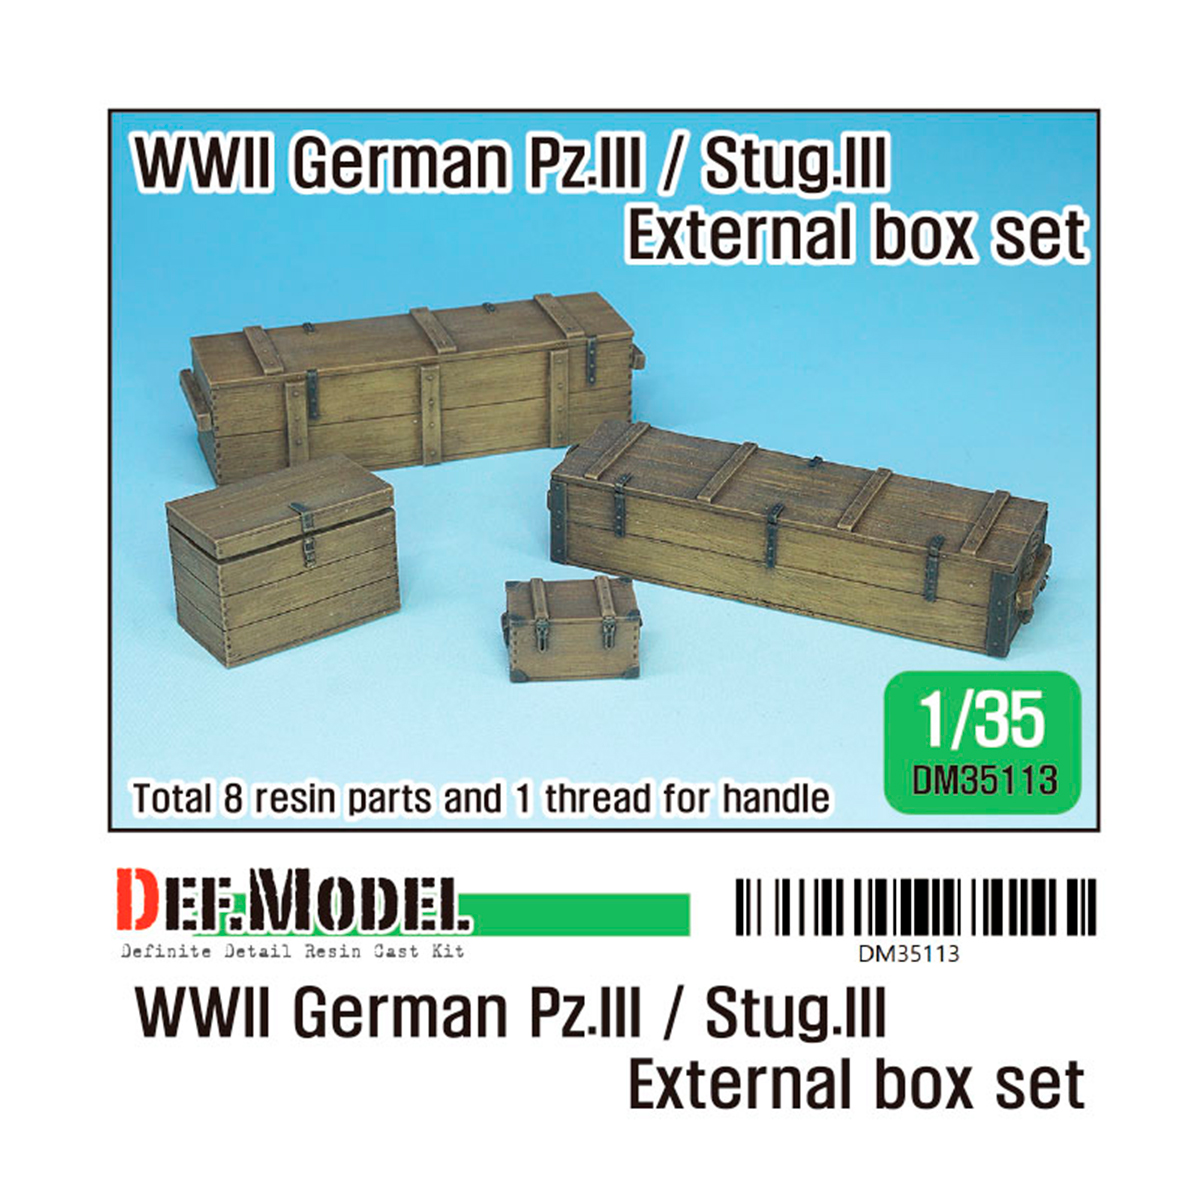 WWII German Pz.III / Stug.III External box set (for Pz.III/ Stug.III kit)